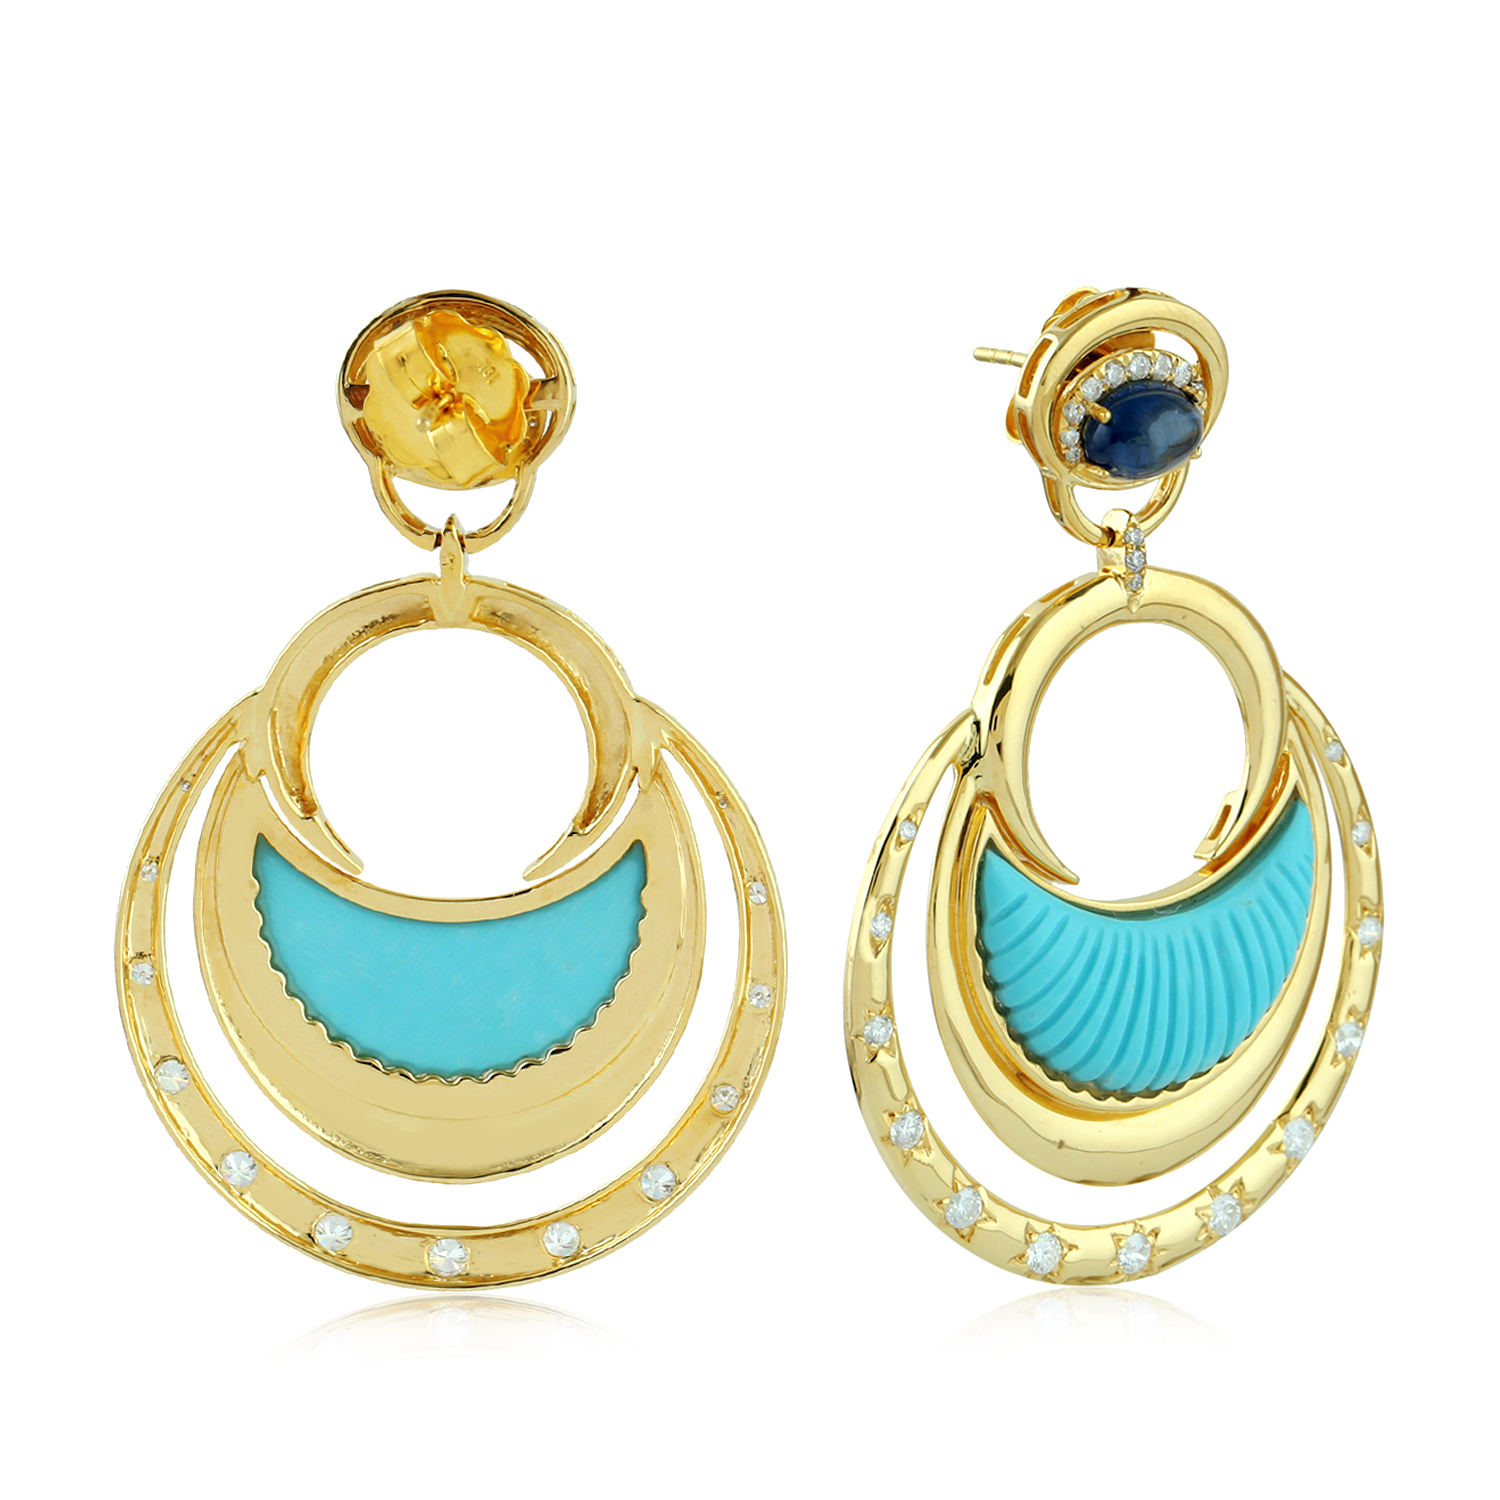 13.77ct Natural Sapphire Dangle Earrings 18k Yellow Gold Jewelry | eBay